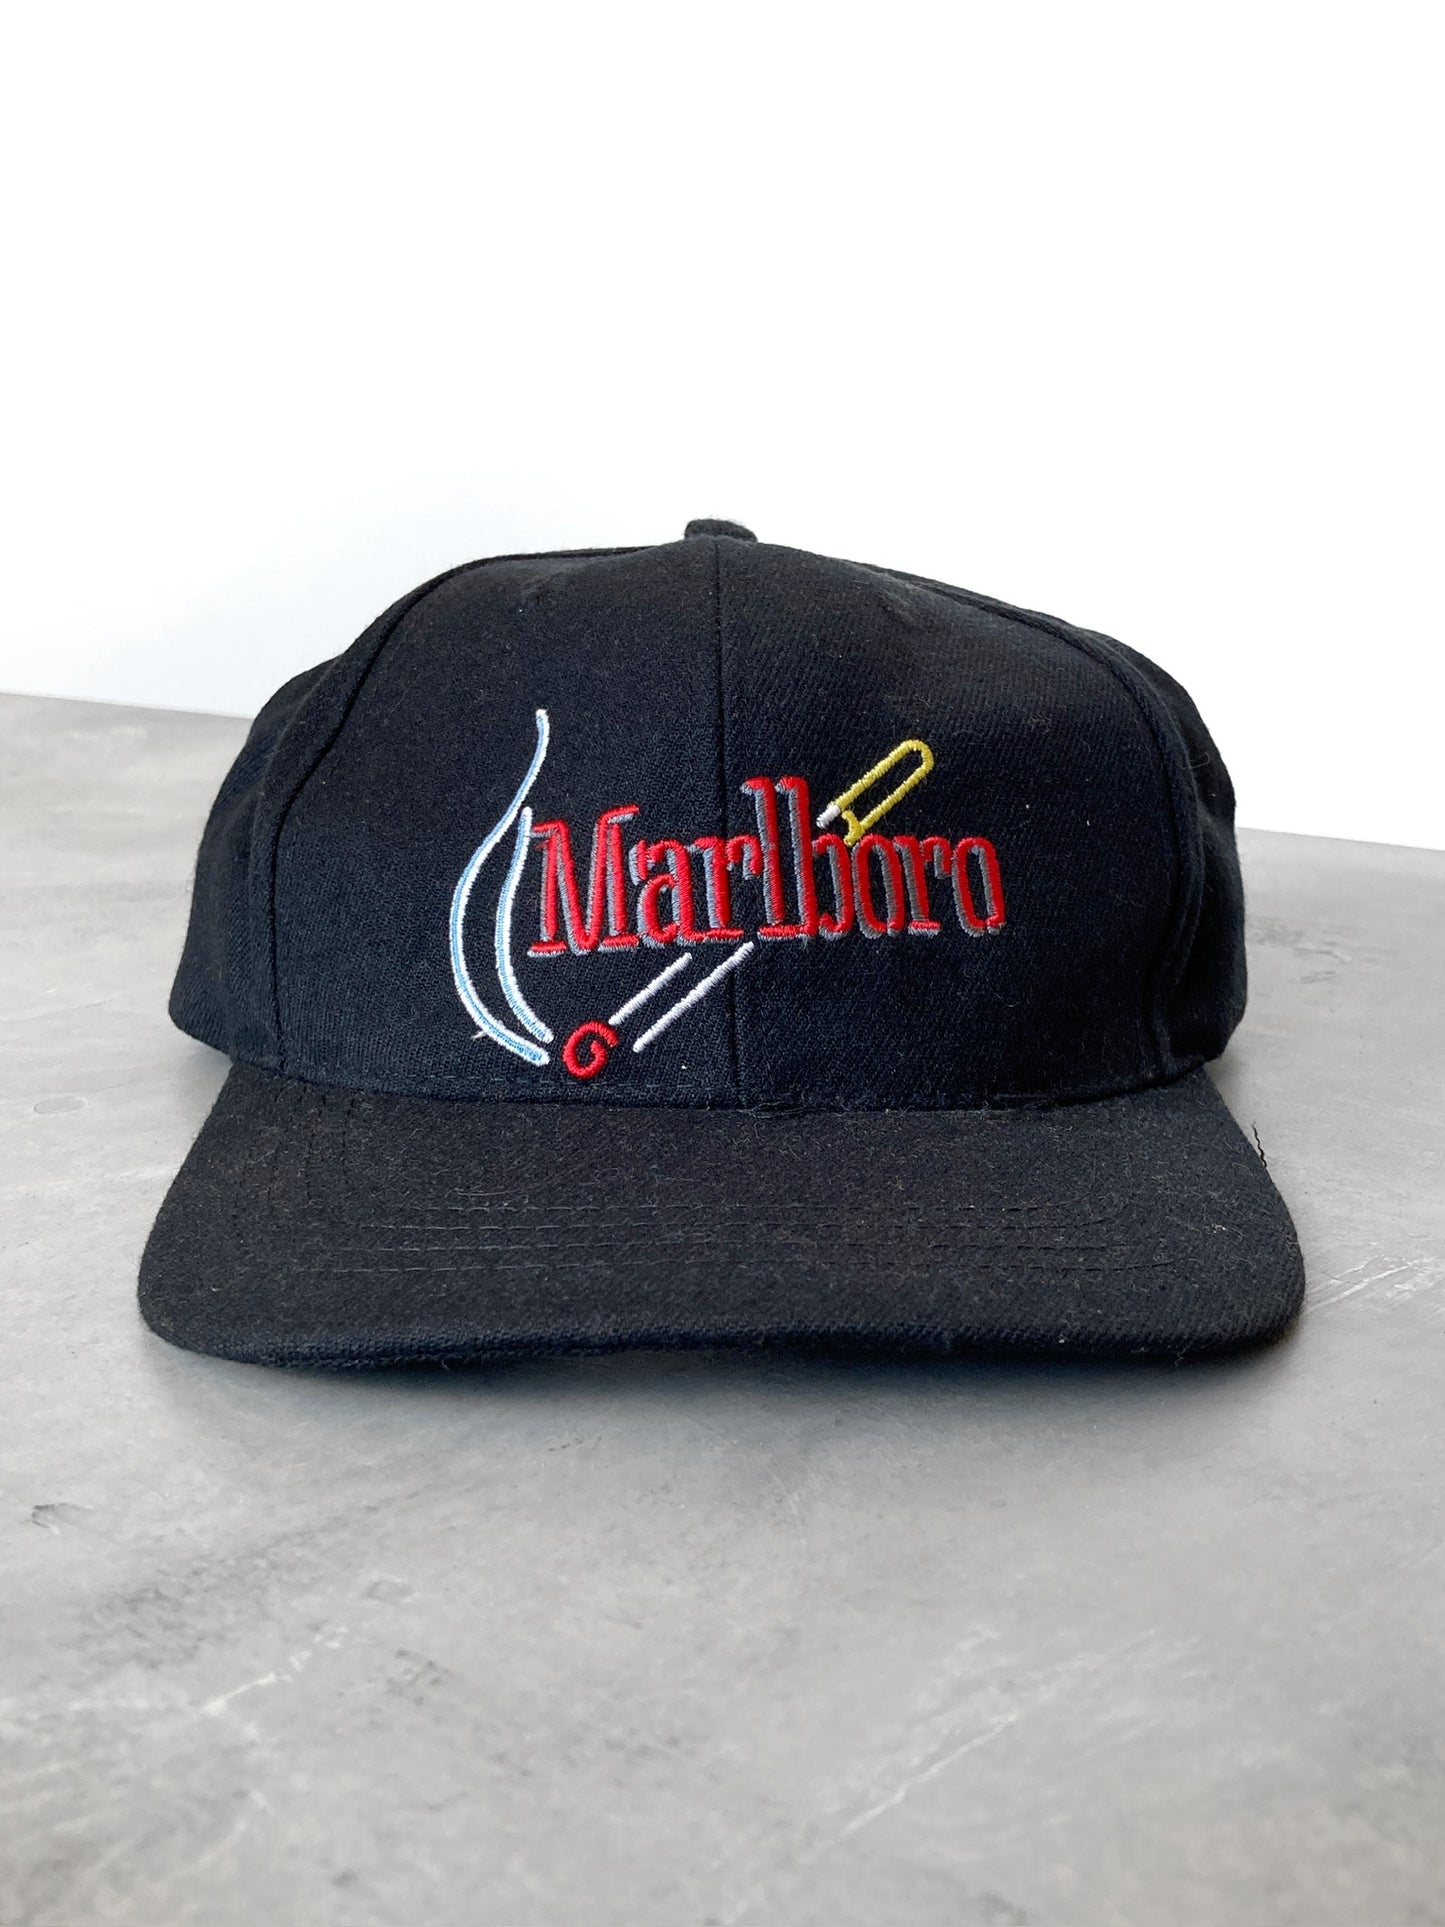 Marlboro Hat 90's